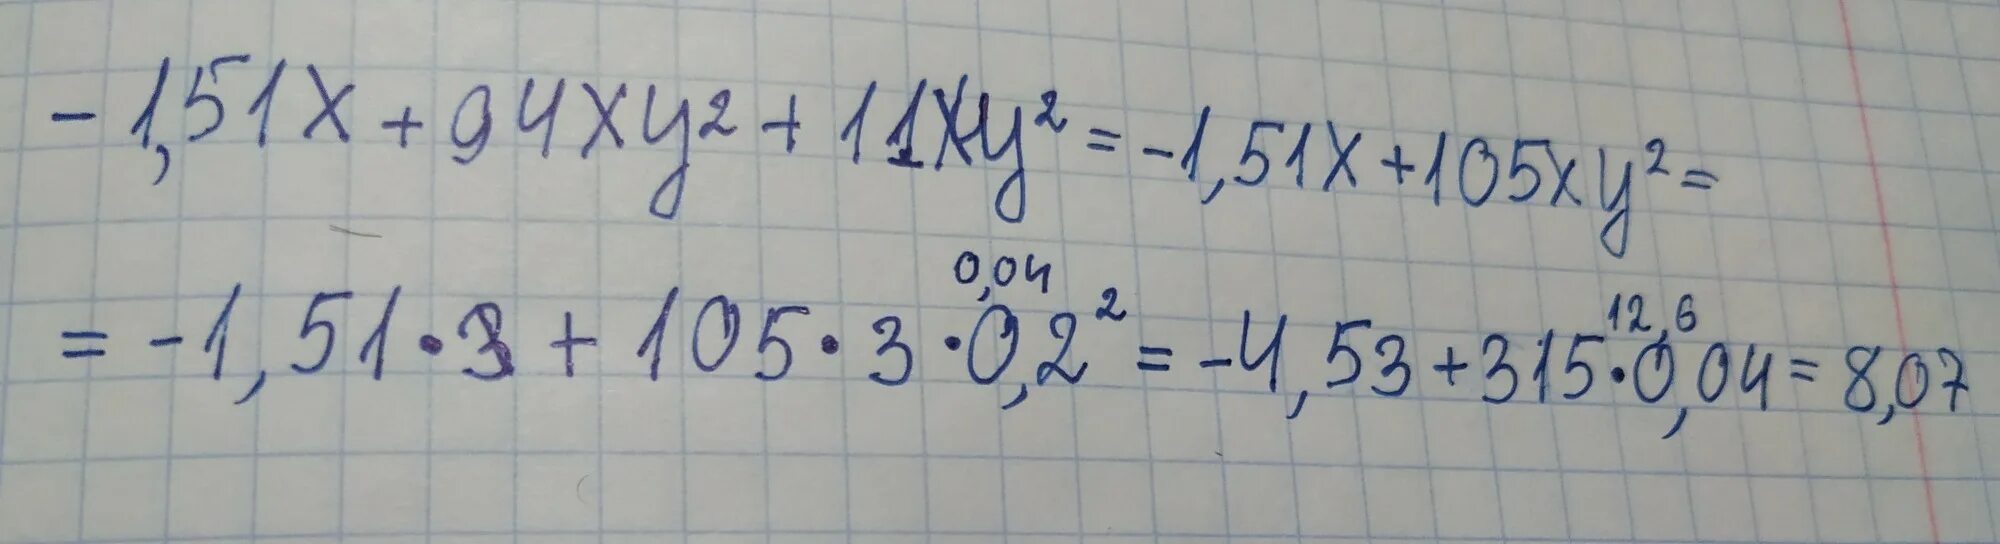 Найди значение многочлена при x 2. Найди значение многочлена -1,62x+66xy²+19xy². Значение многочлена1. 67 X + 63 X Y ² + 29xy² если x = 2 и y = 0,1. Найдите значение многочлена - 1,3x+95xy²+17xy²,если x=3 и y=0,1.